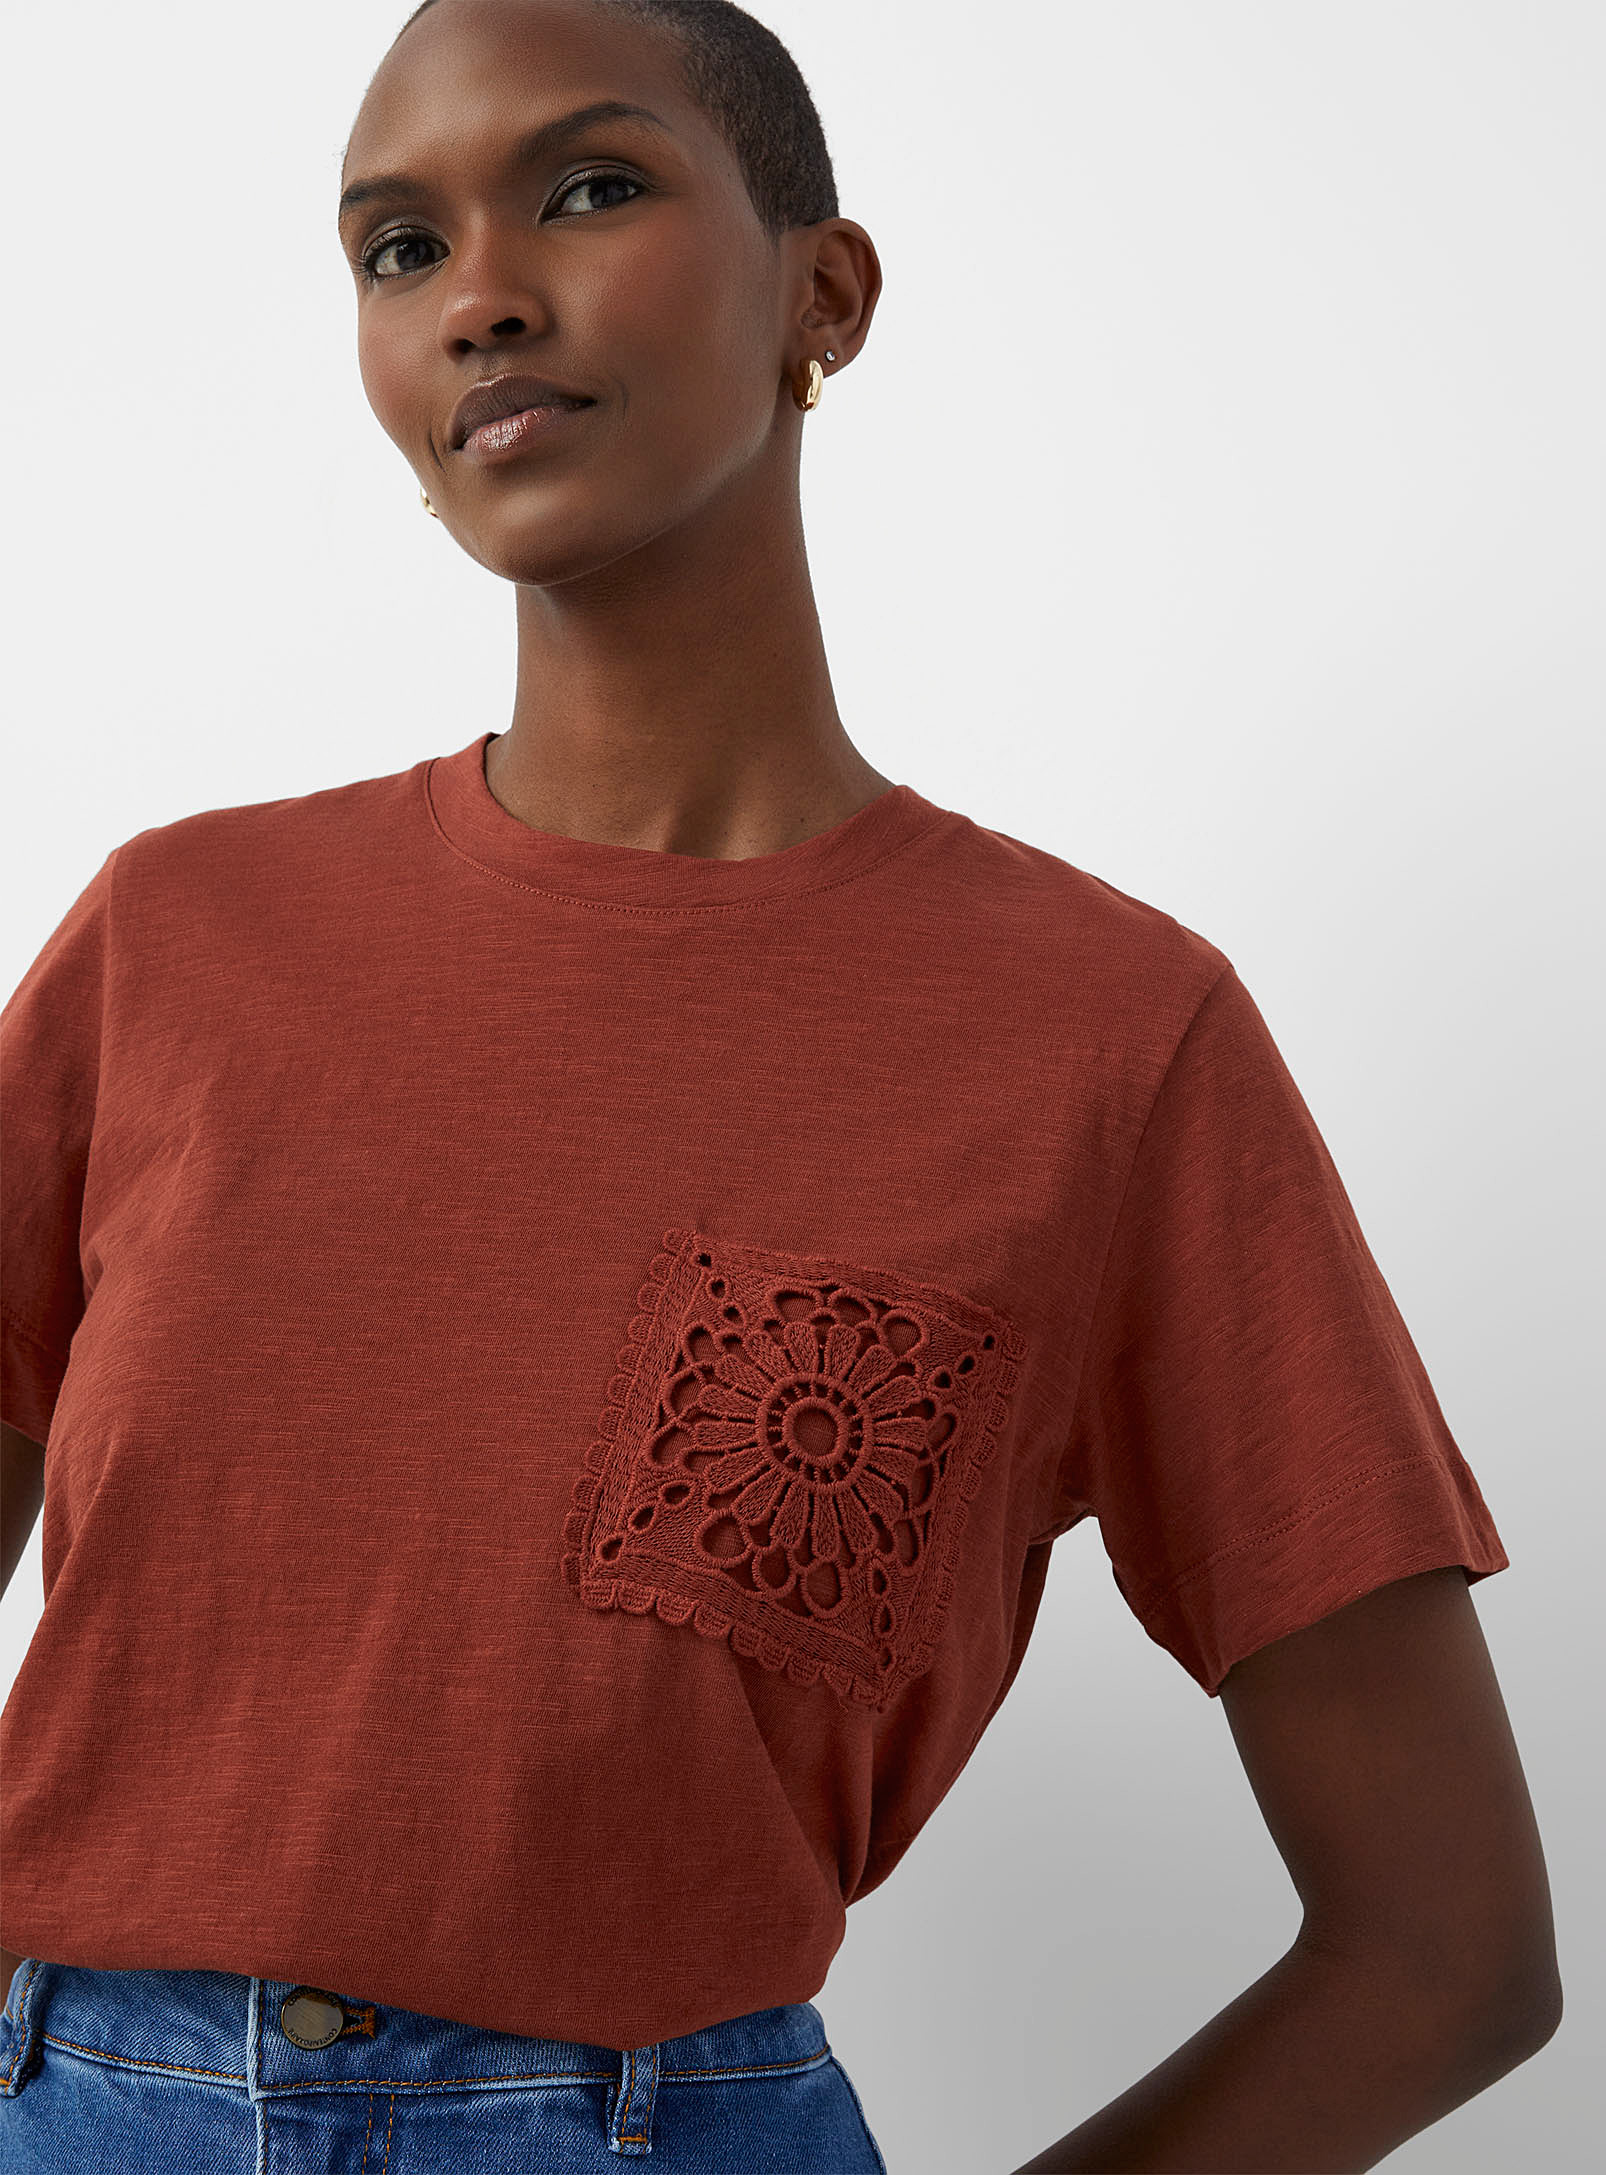 Contemporaine Crocheted Pocket T-shirt In Copper